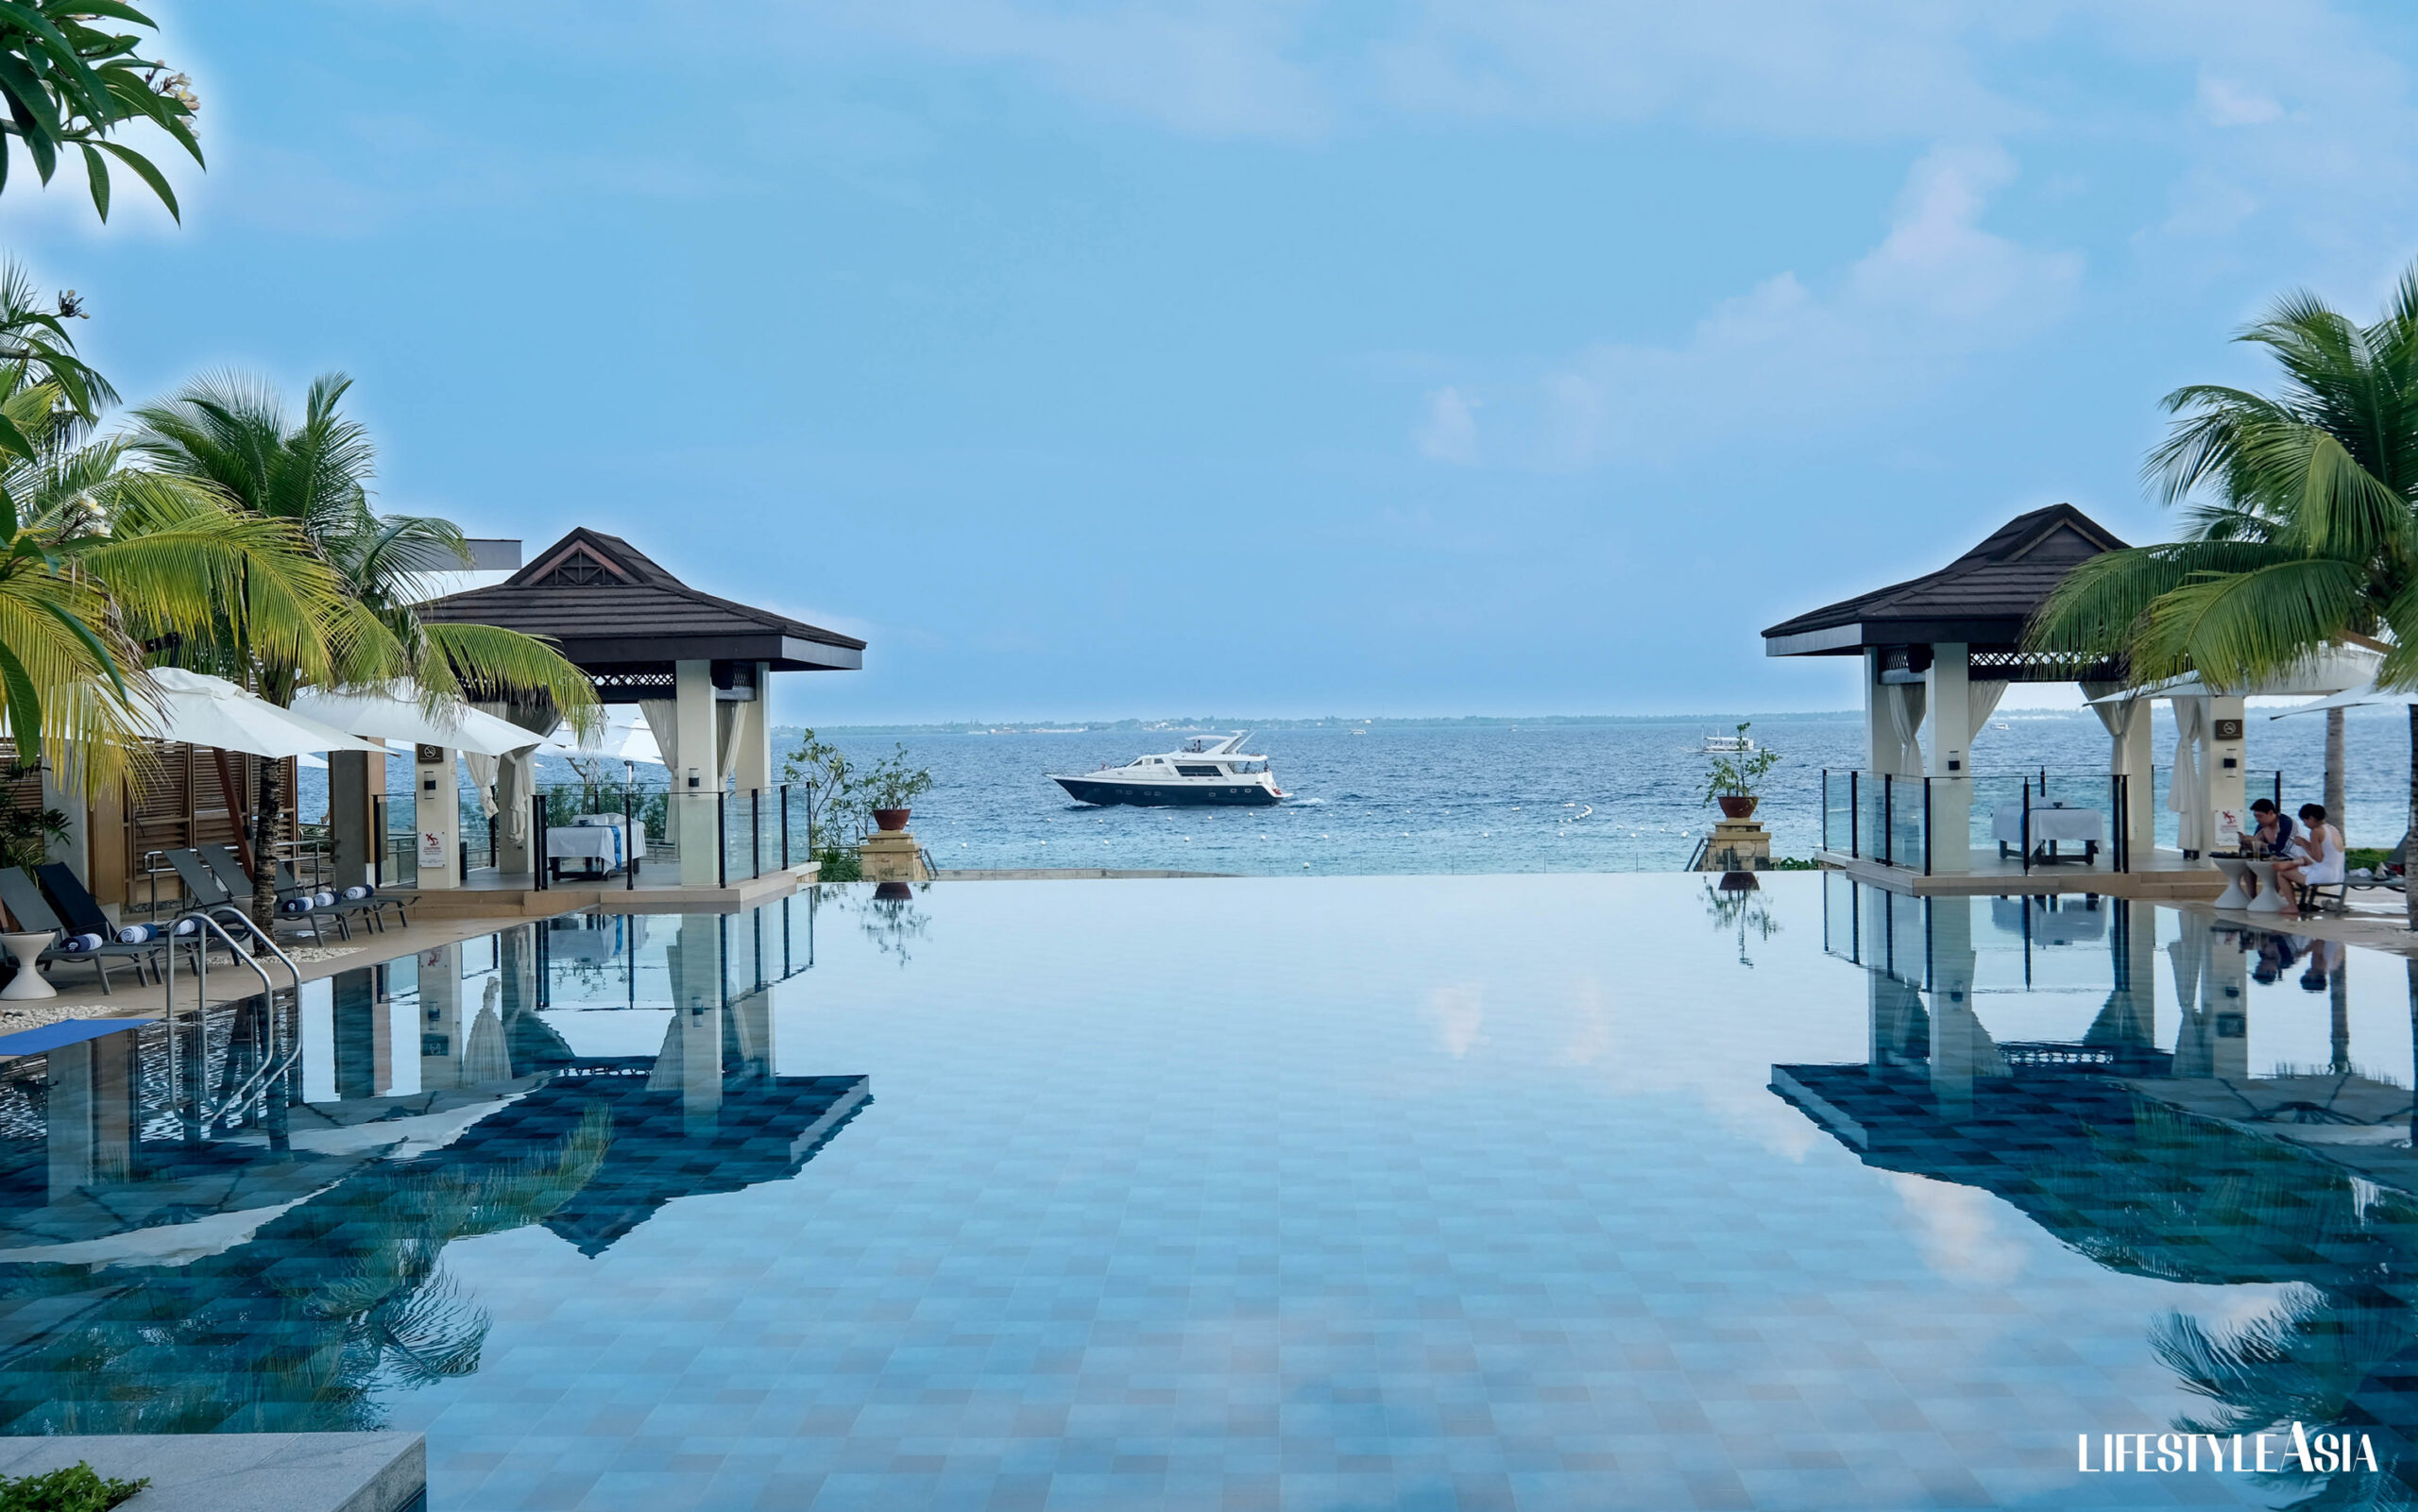 The resort’s infinity pool showcasing spectacular sea views